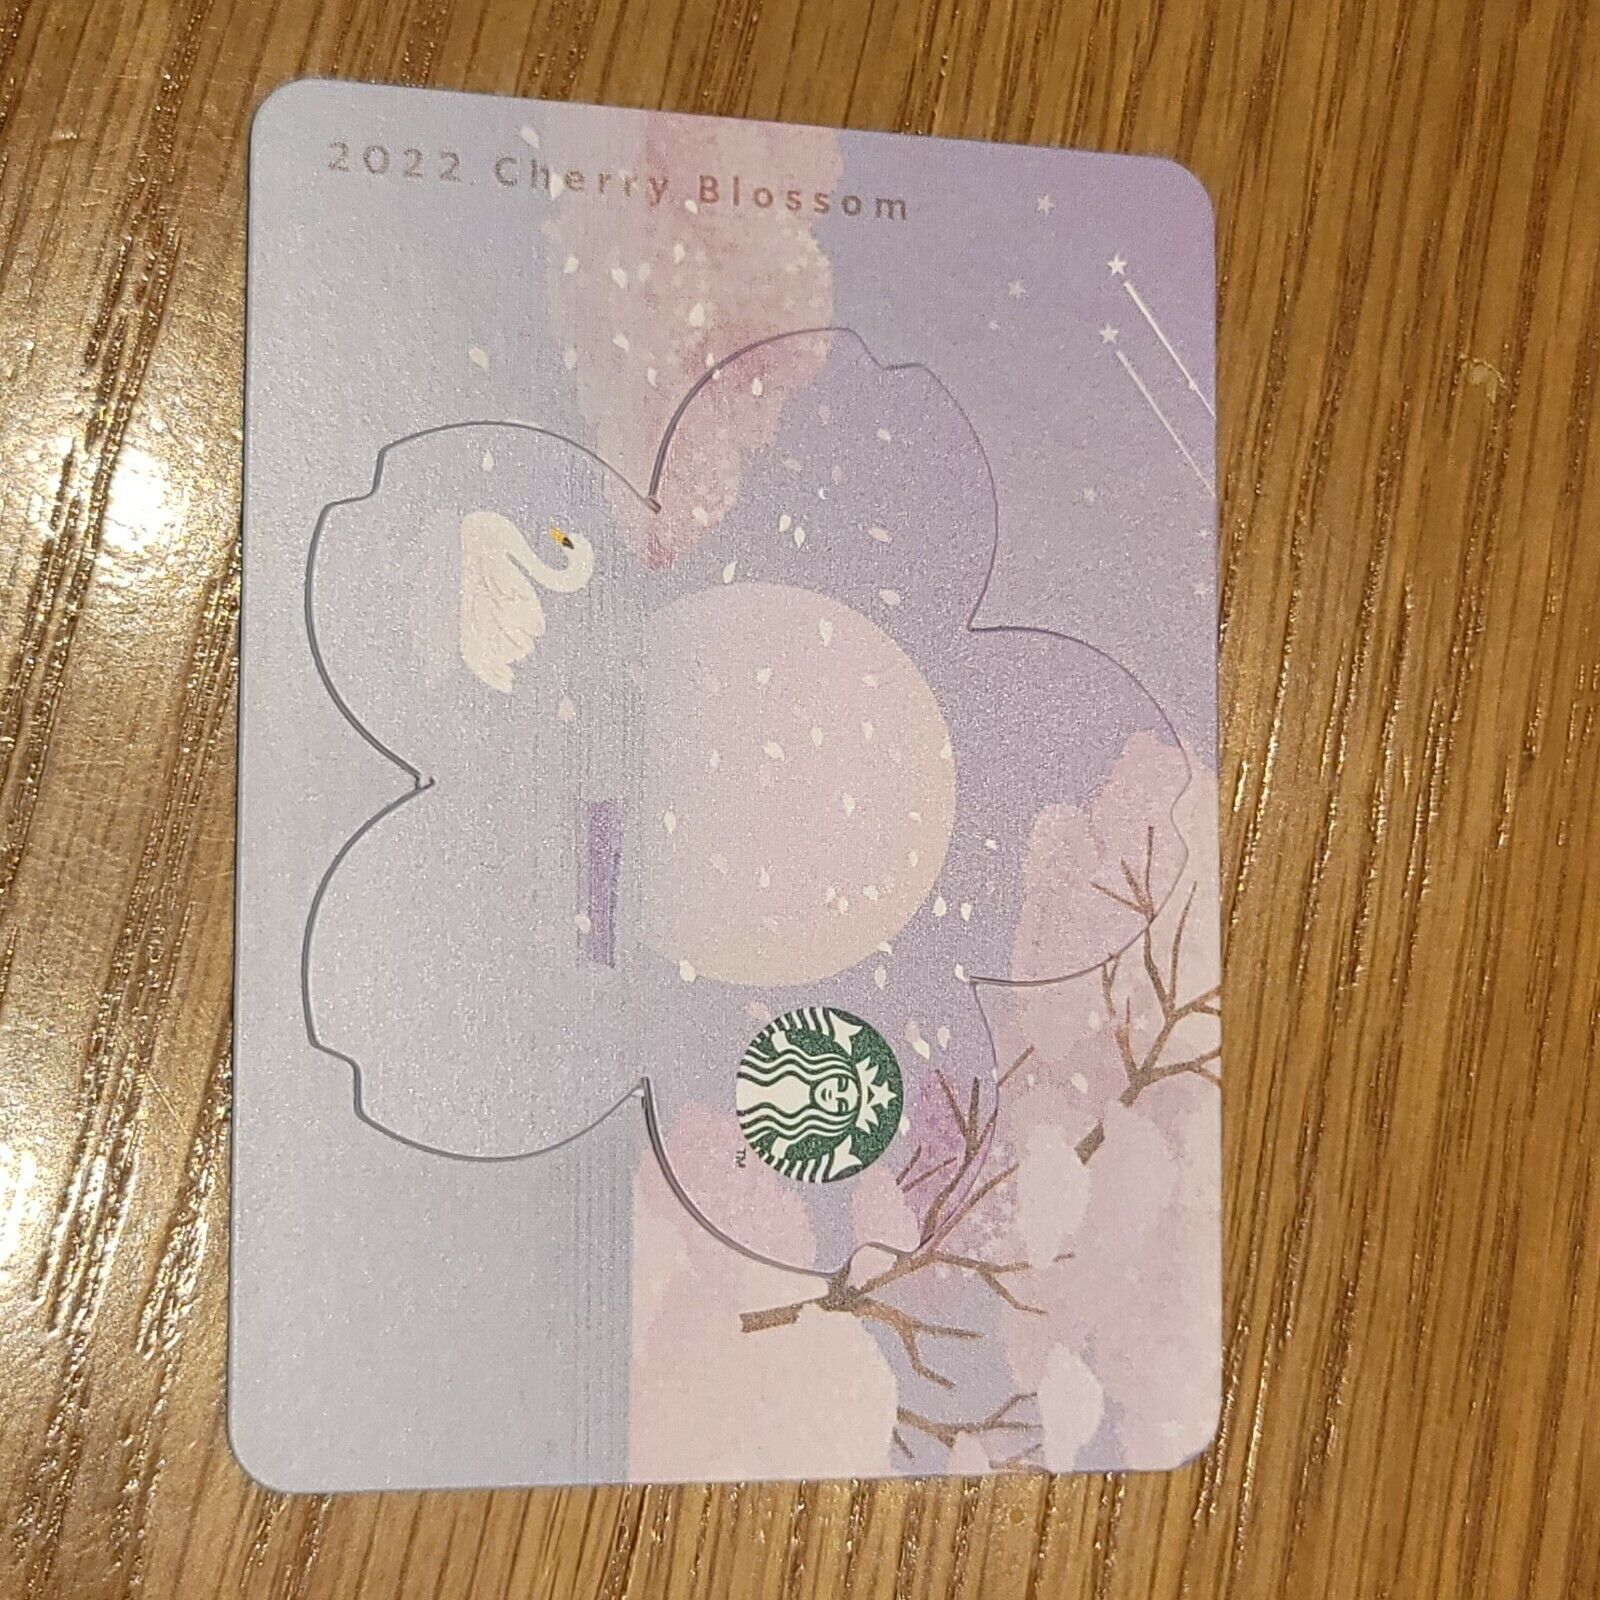 Starbucks Korea card 22 2022 Cherry Blossom Card